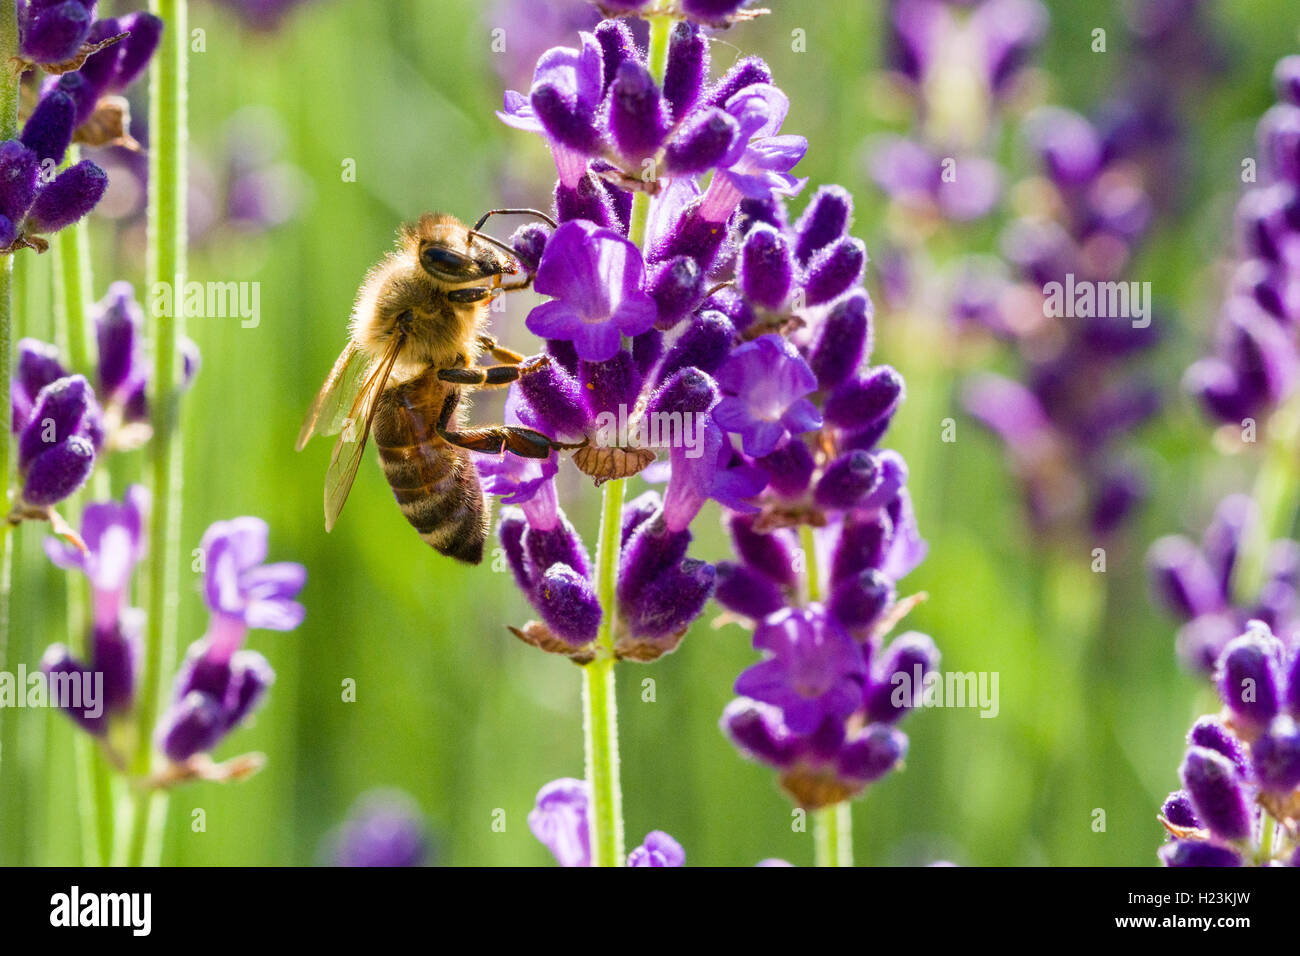 Carniolan de abejas (Apis mellifera Carnica) está recogiendo néctar en un violeta Lavanda (Lavandula) Flor, Sajonia, Alemania Foto de stock